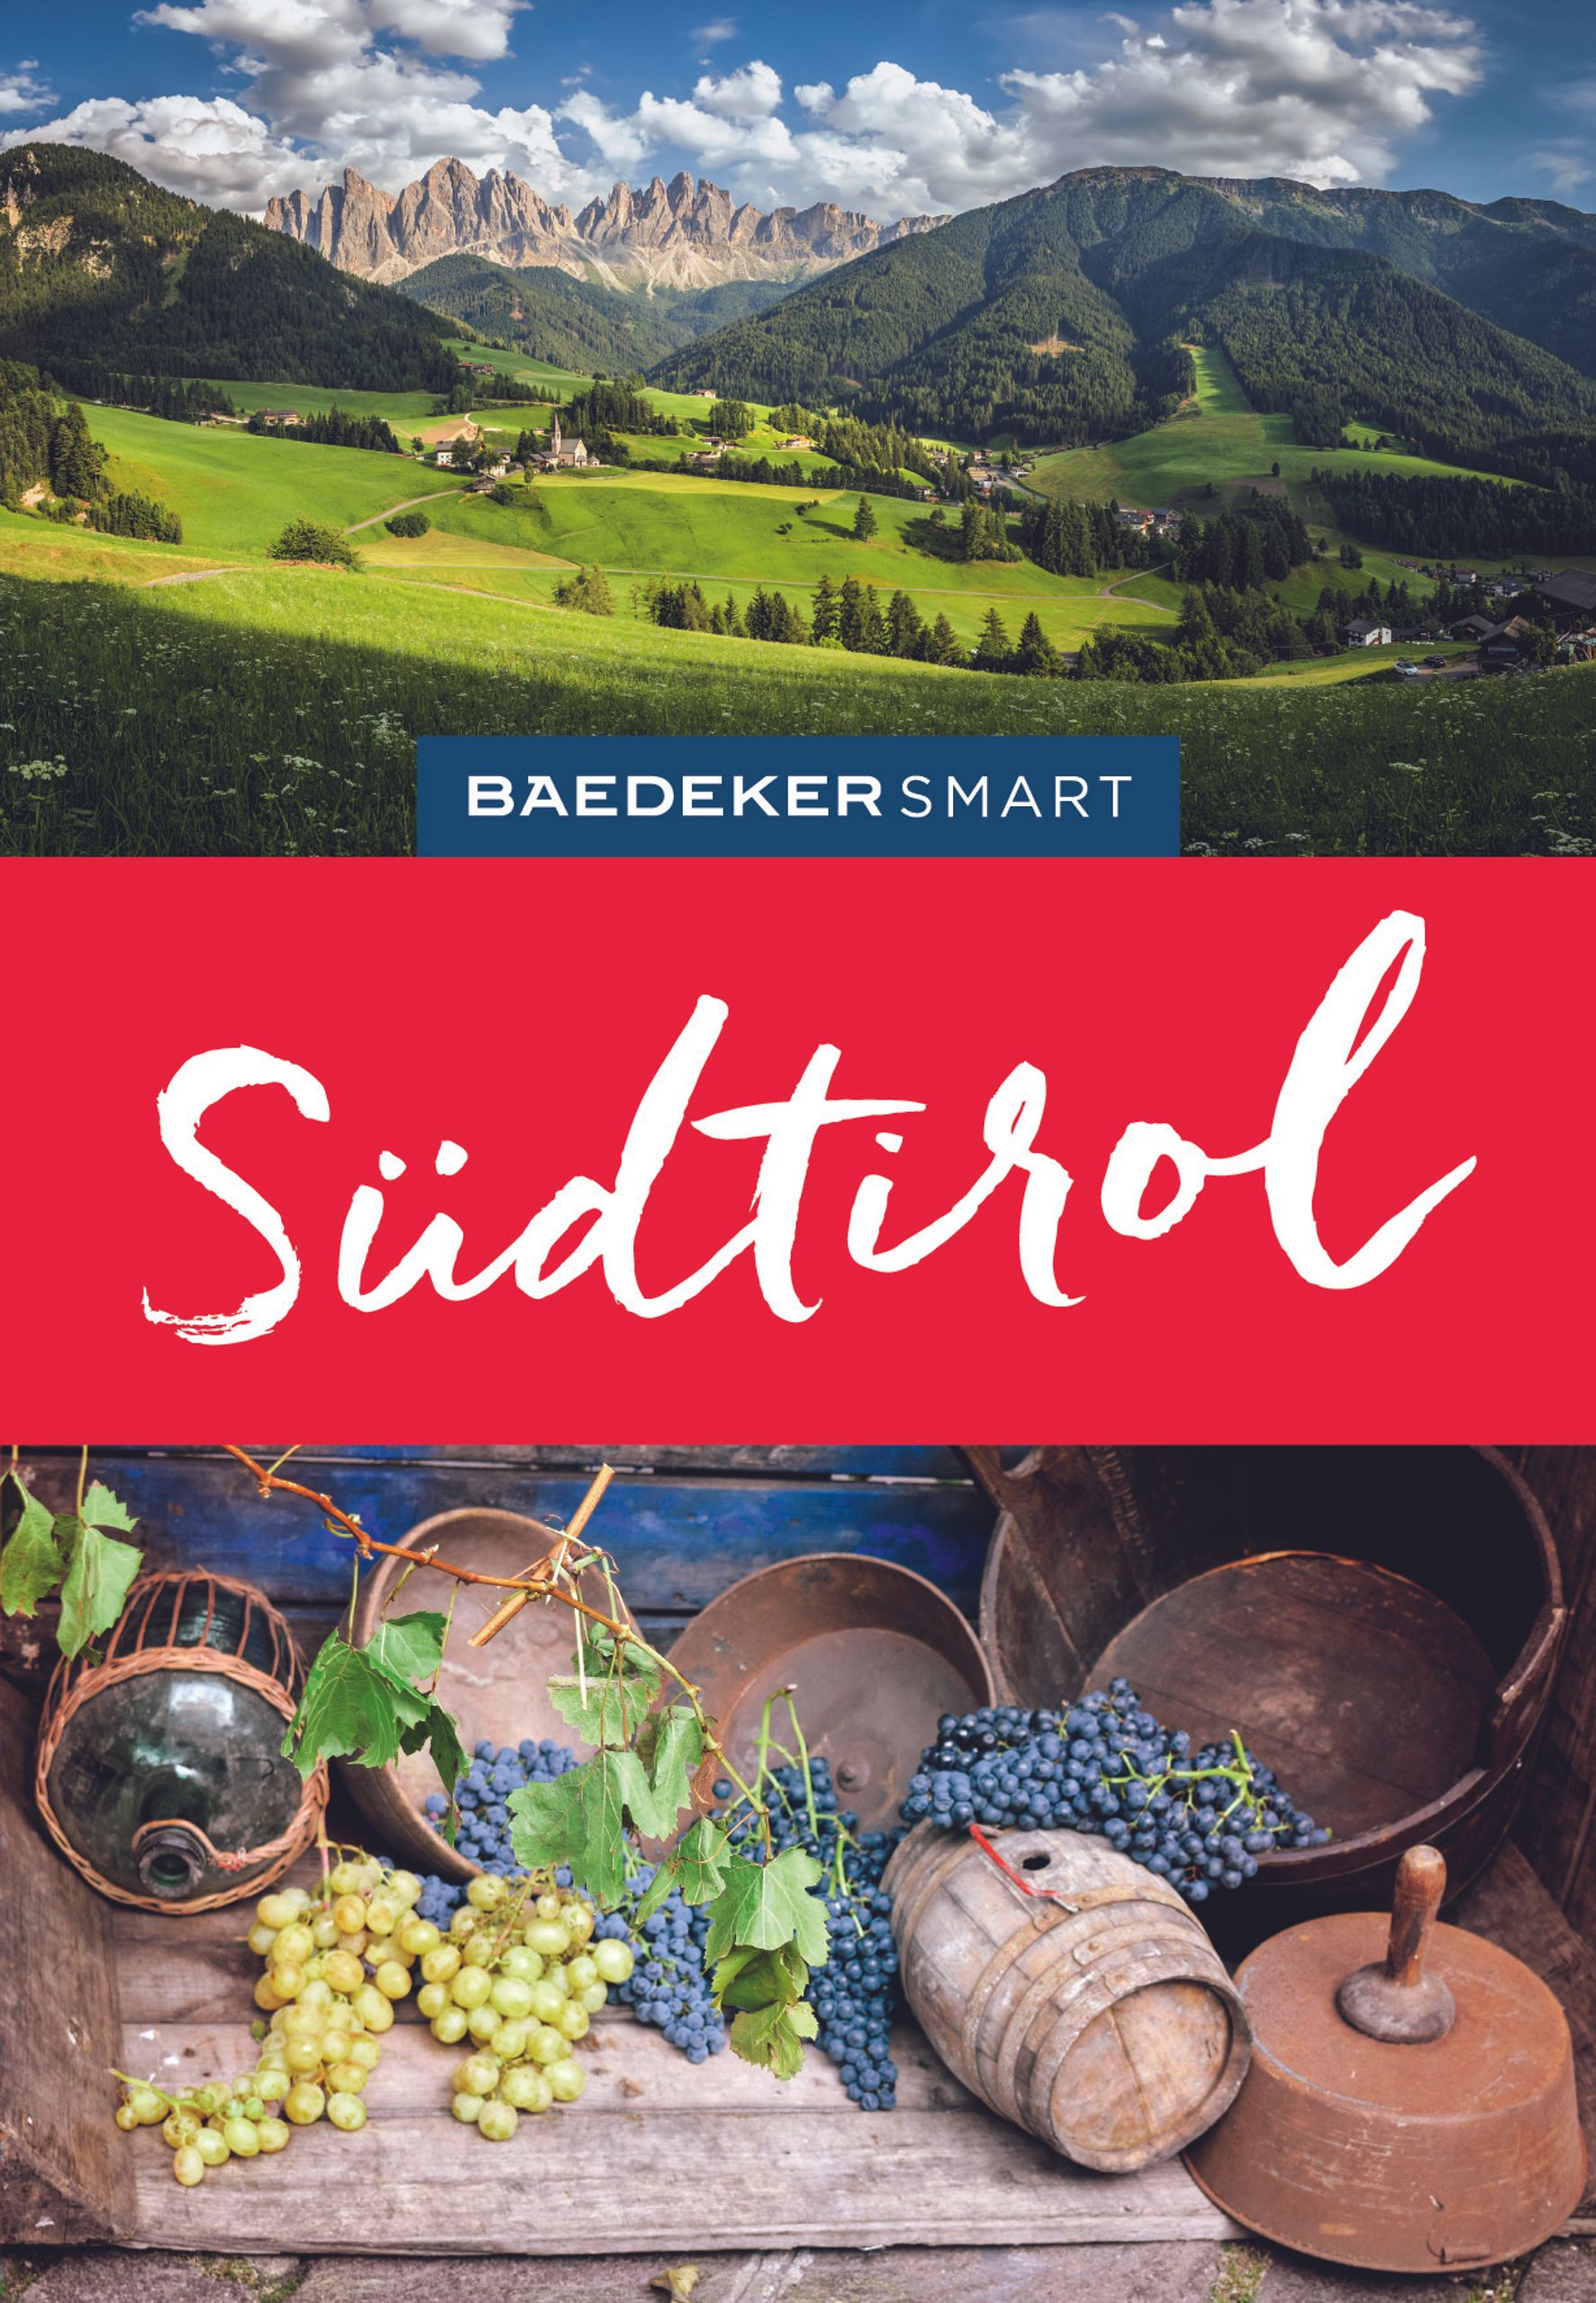 Baedeker Südtirol